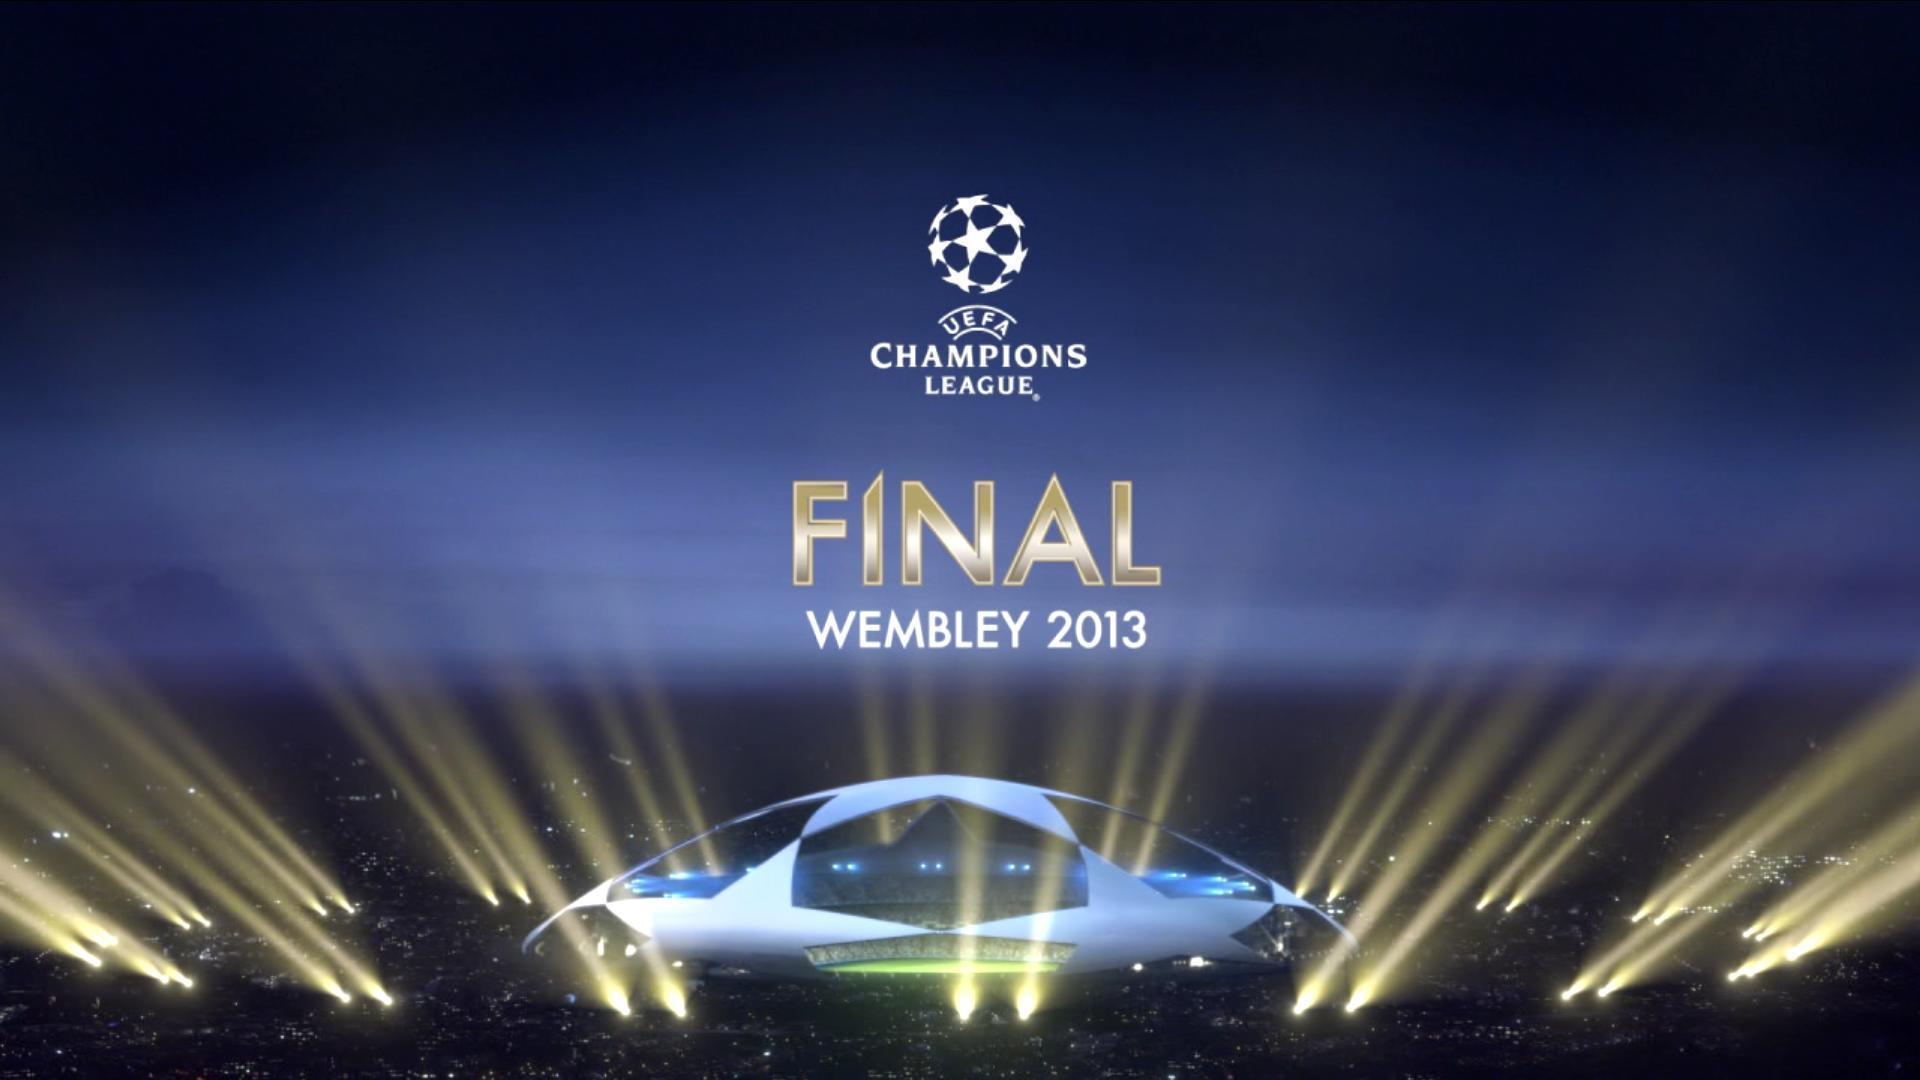 UEFA Champions League Wallpaper&Desktop Background Wallpaper